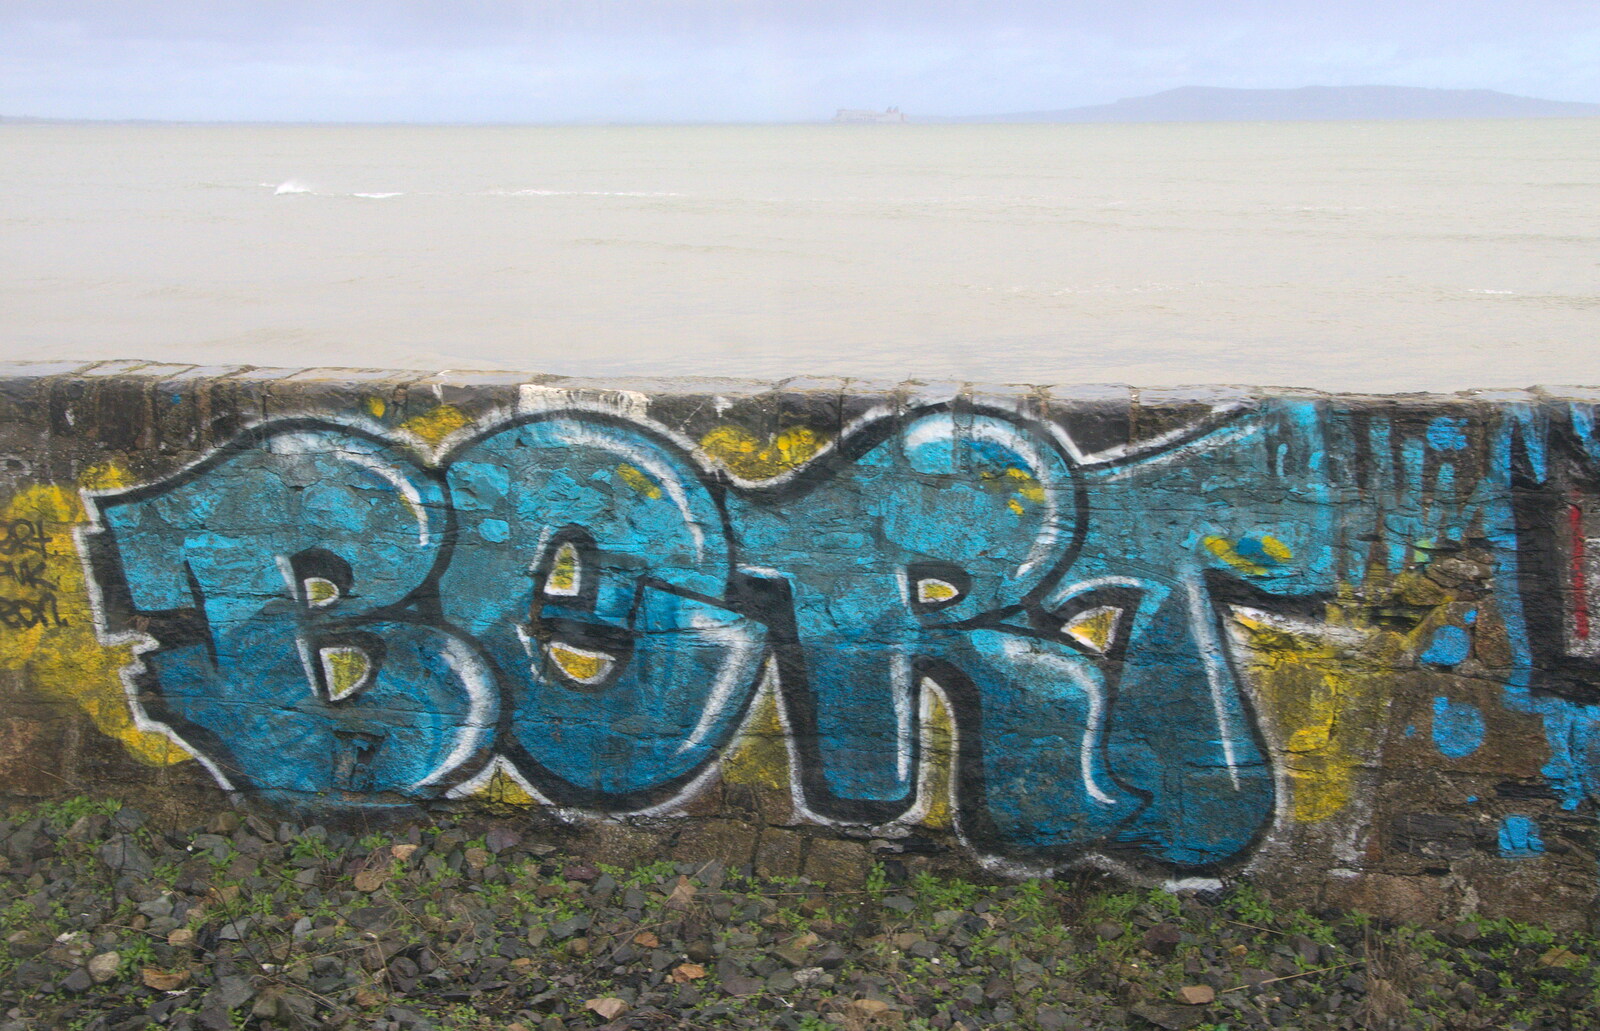 Bert Graffiti on the sea wall from Christmas Eve in Dublin and Blackrock, Ireland - 24th December 2015